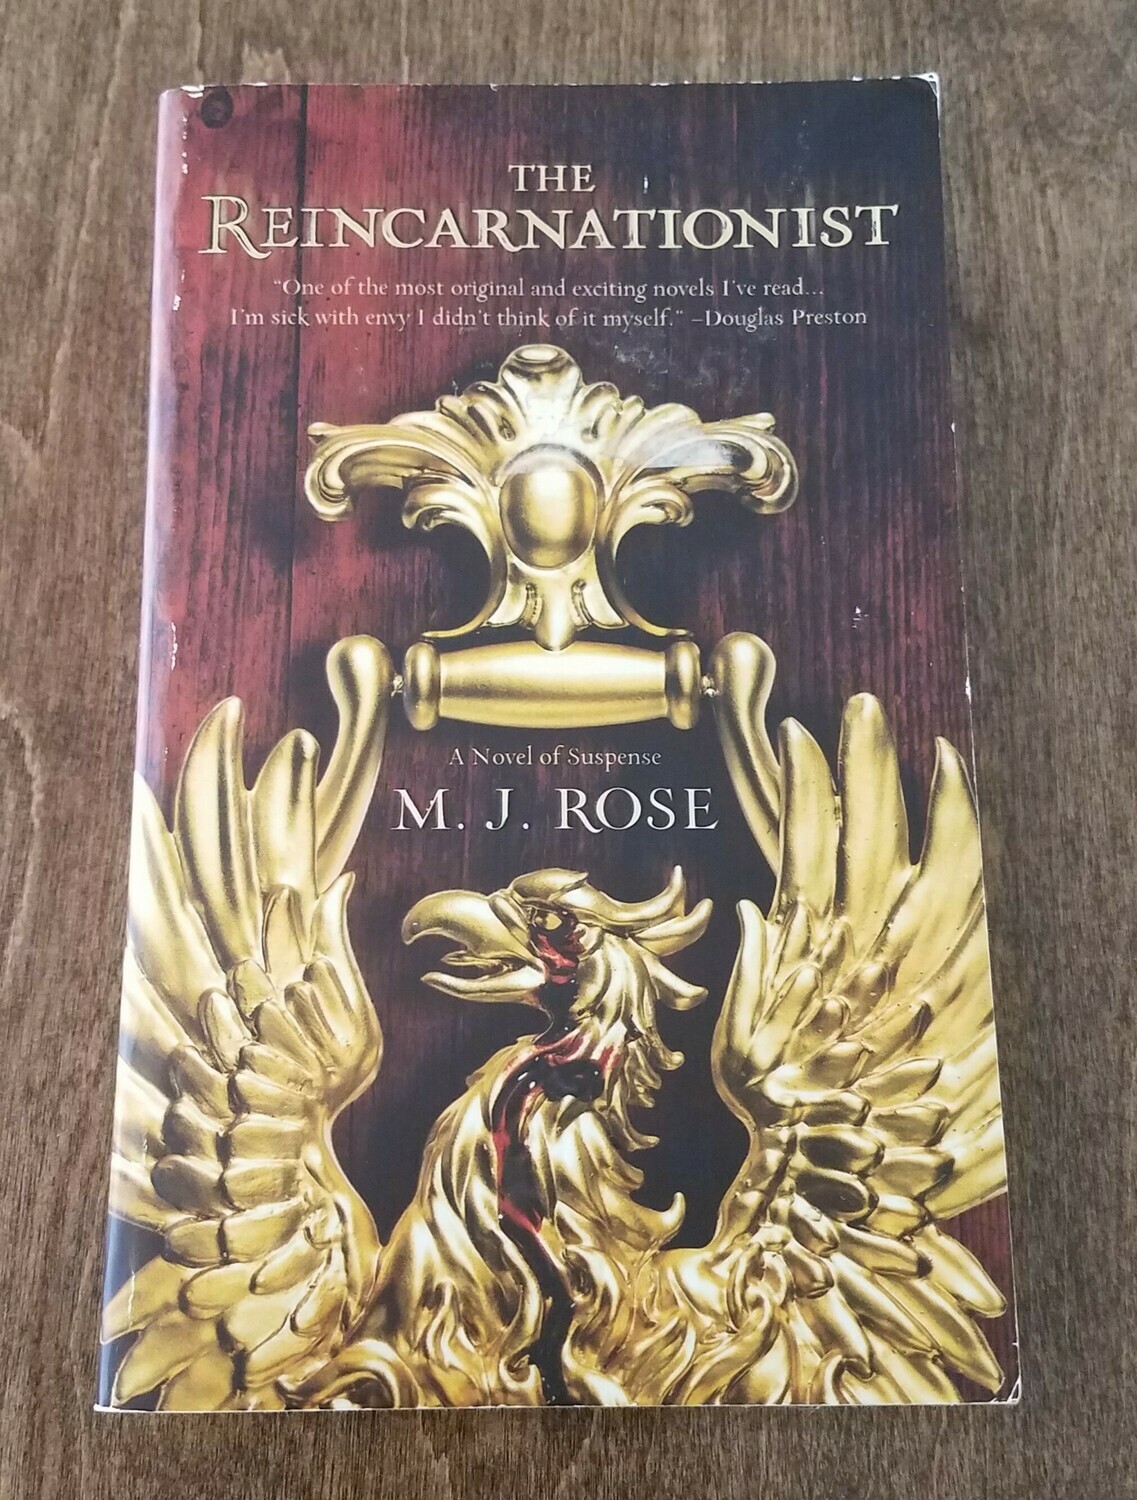 The Reincarnationist by M. J. Rose